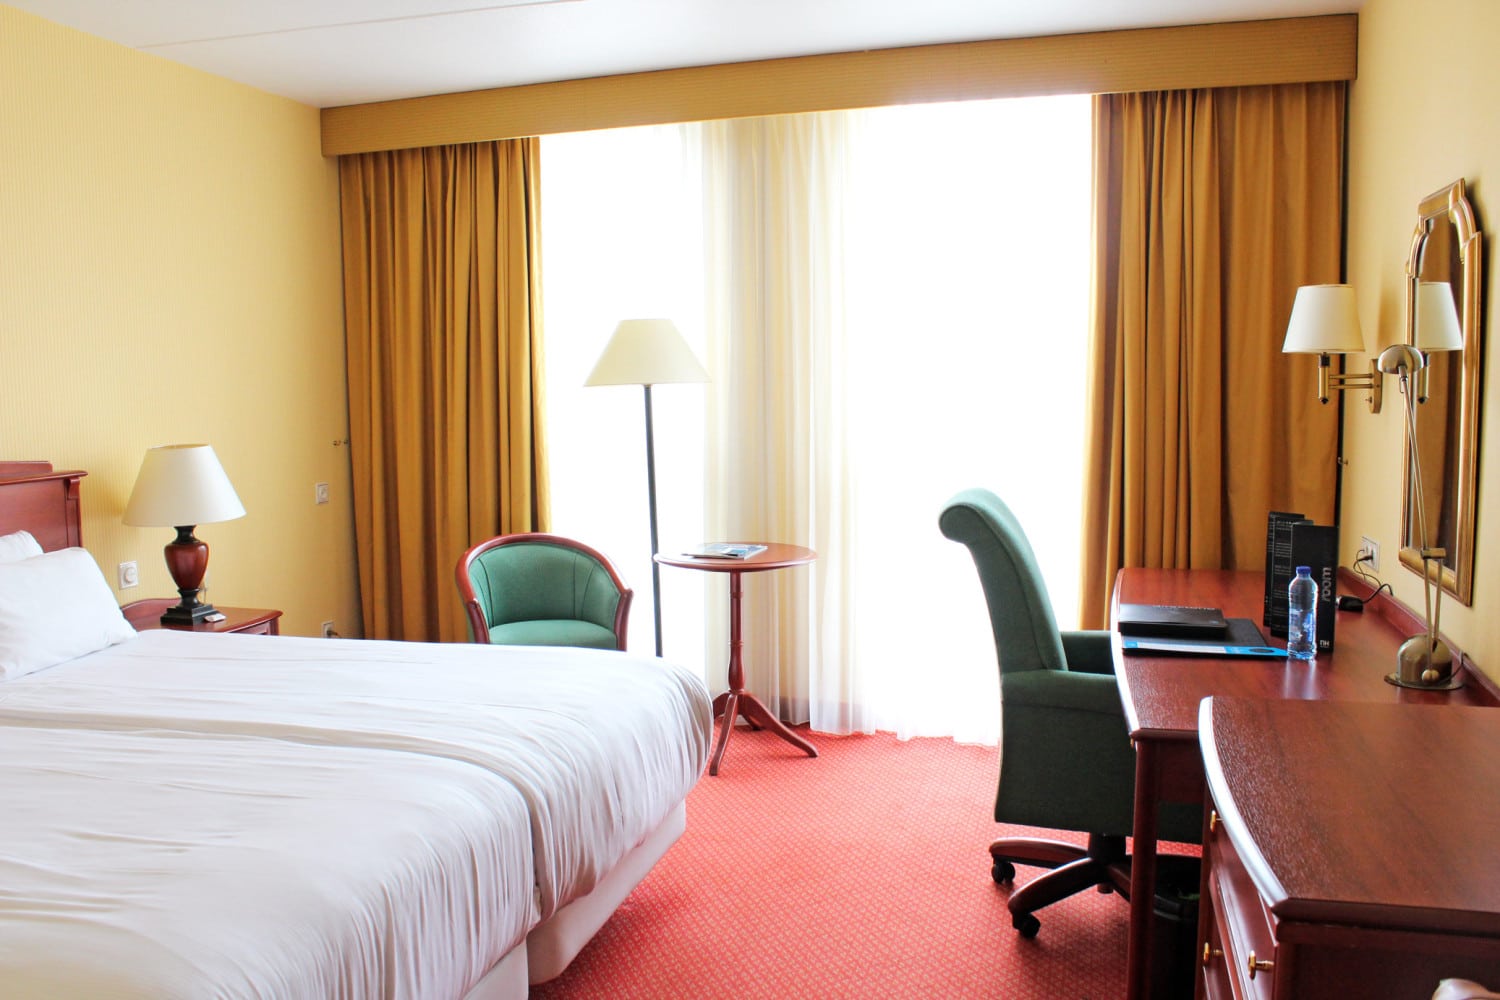 Hotel NH Barbizon Palace Amsterdam: Review